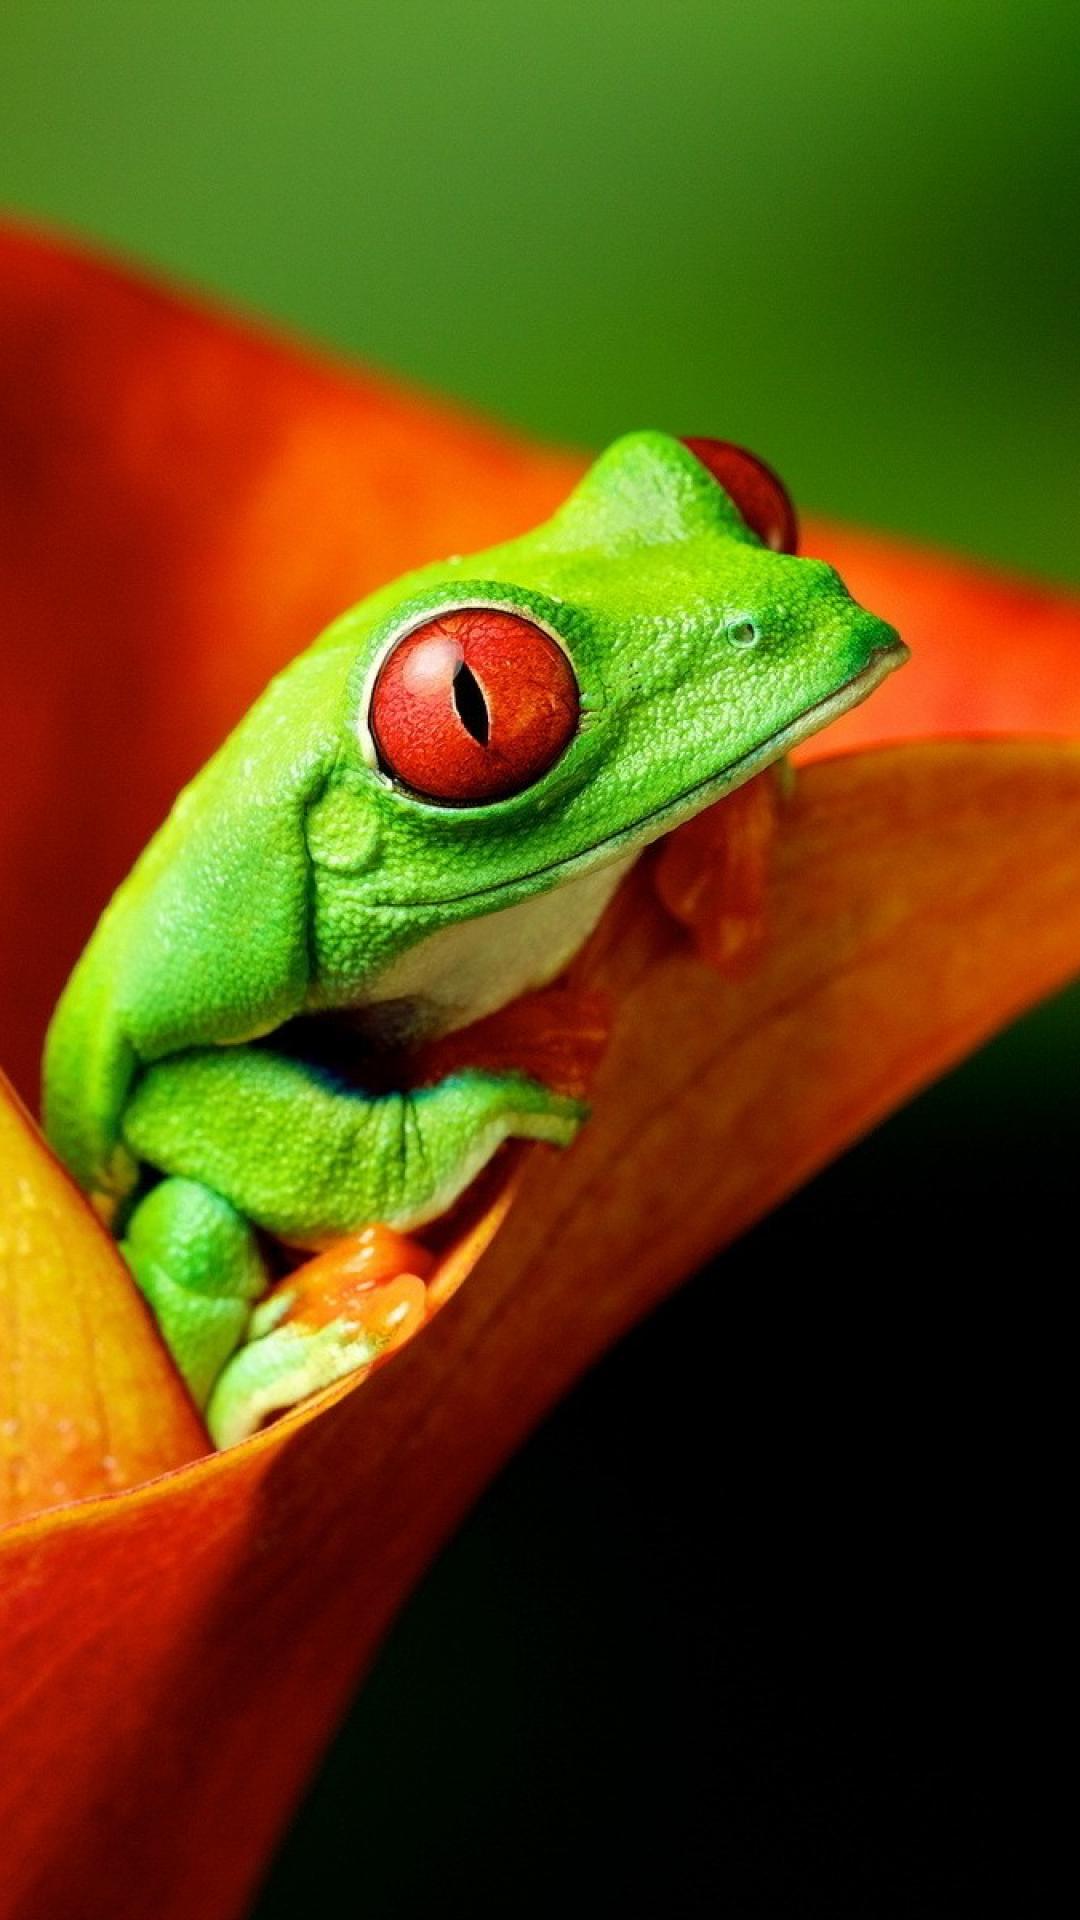 cute frog wallpaper,frog,tree frog,amphibian,agalychnis,red eyed tree frog